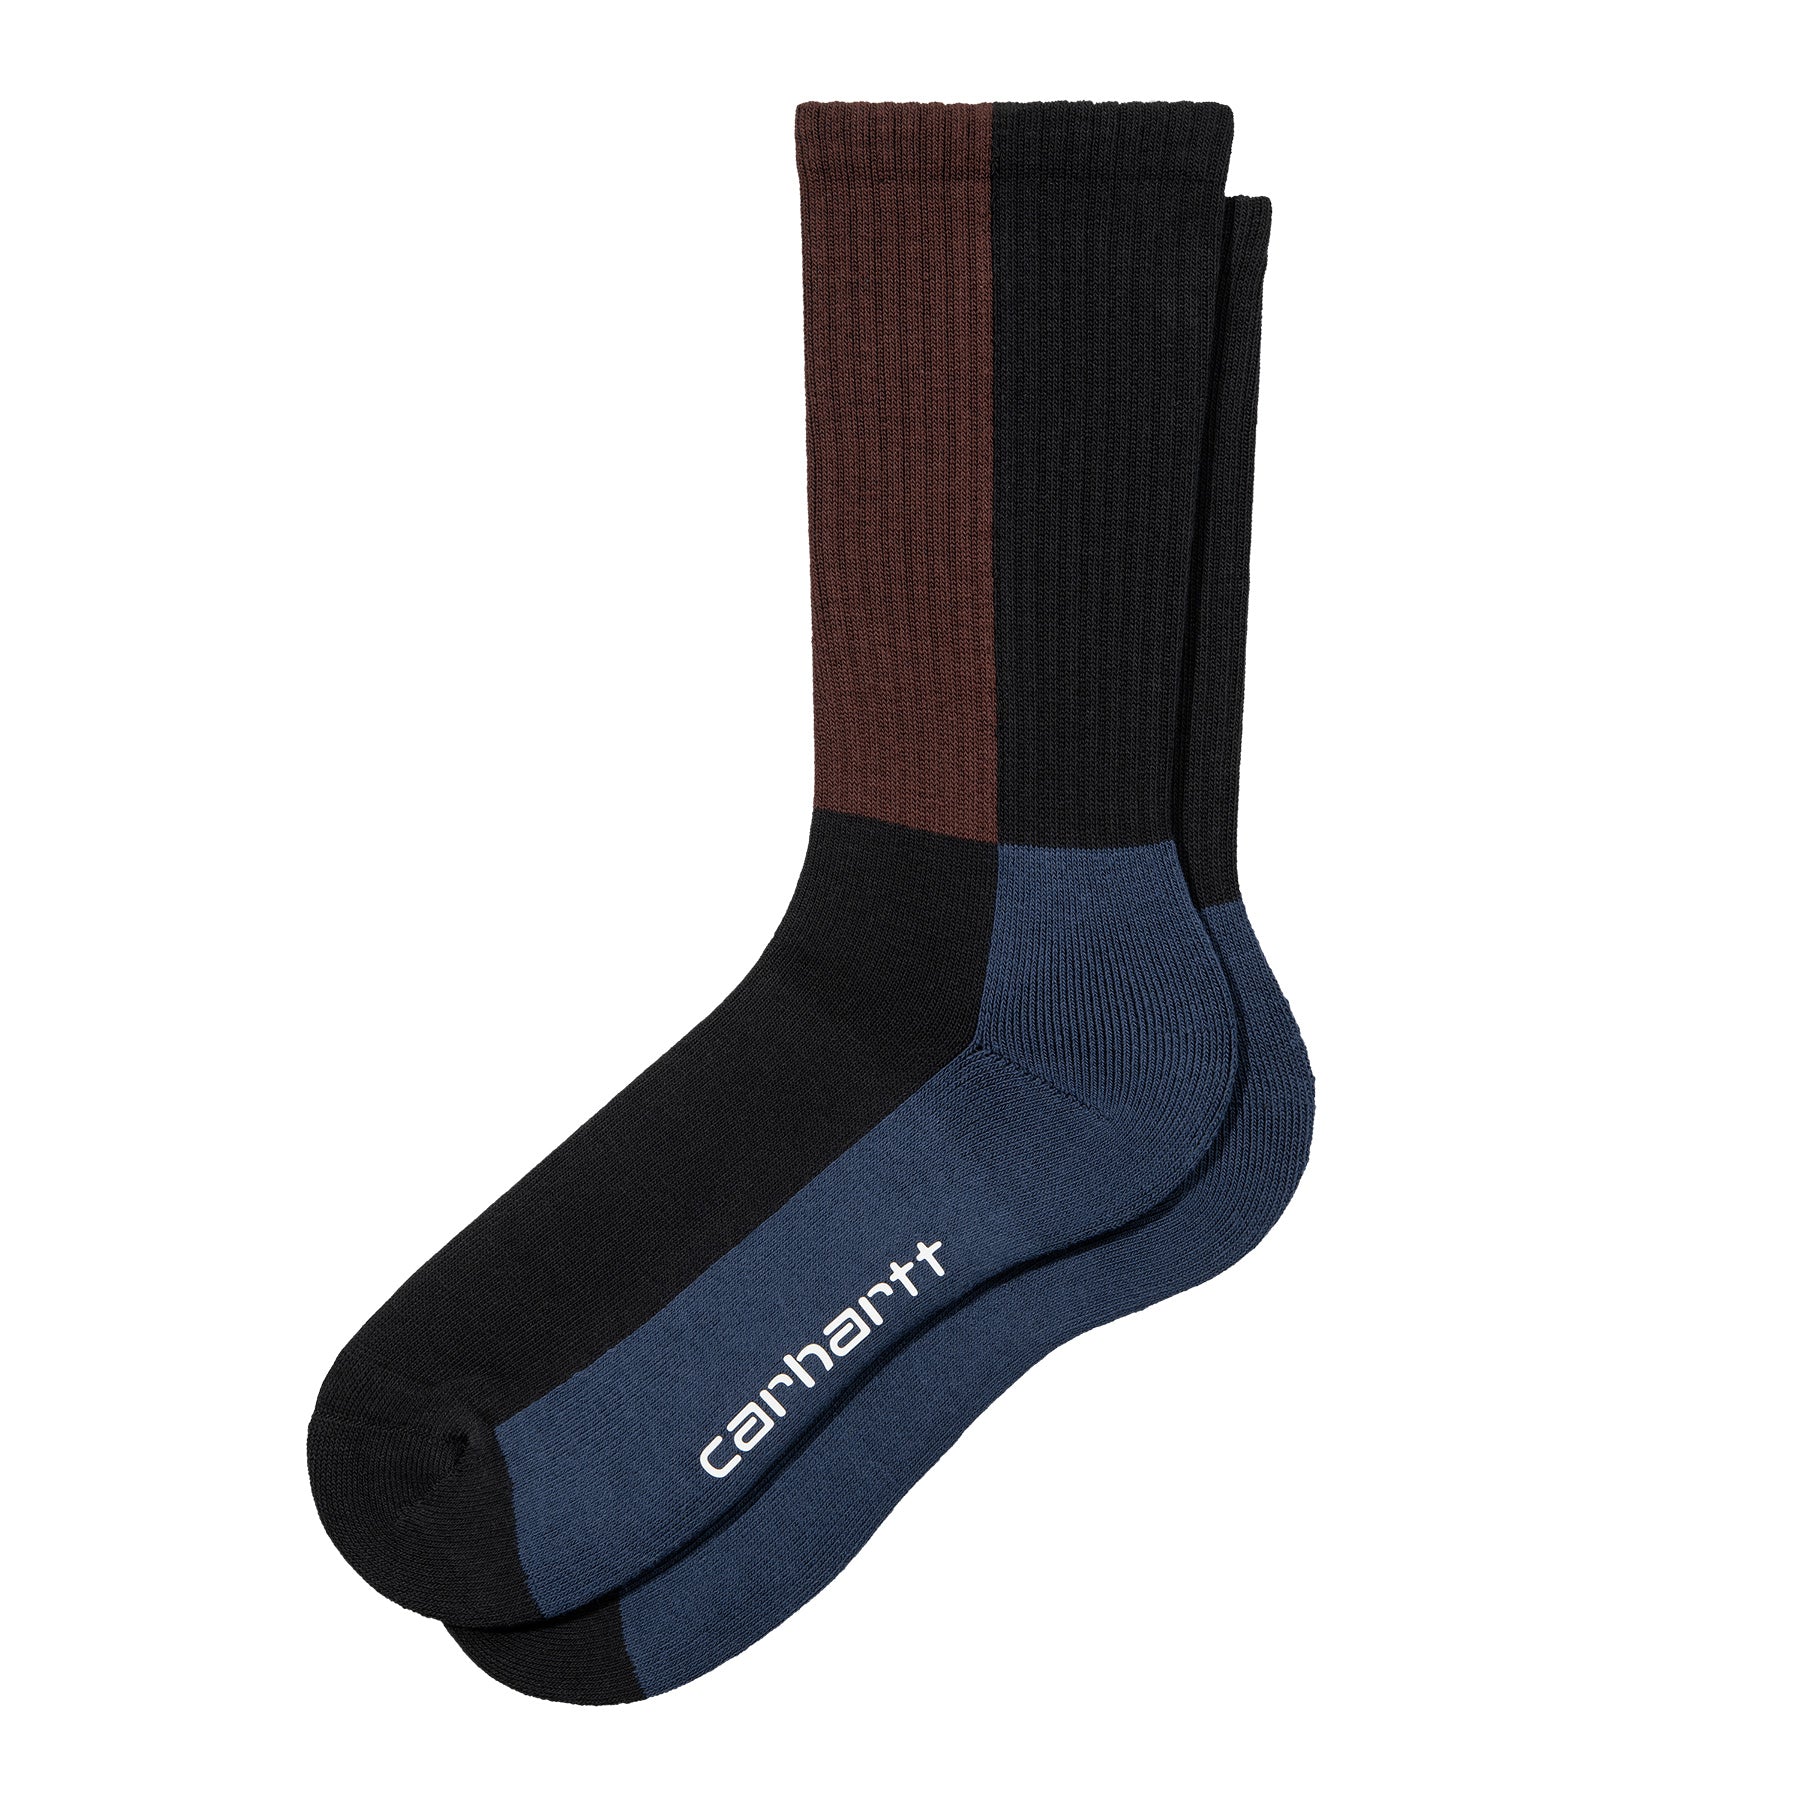 Carhartt WIP Valiant Socks - Black/Enzian